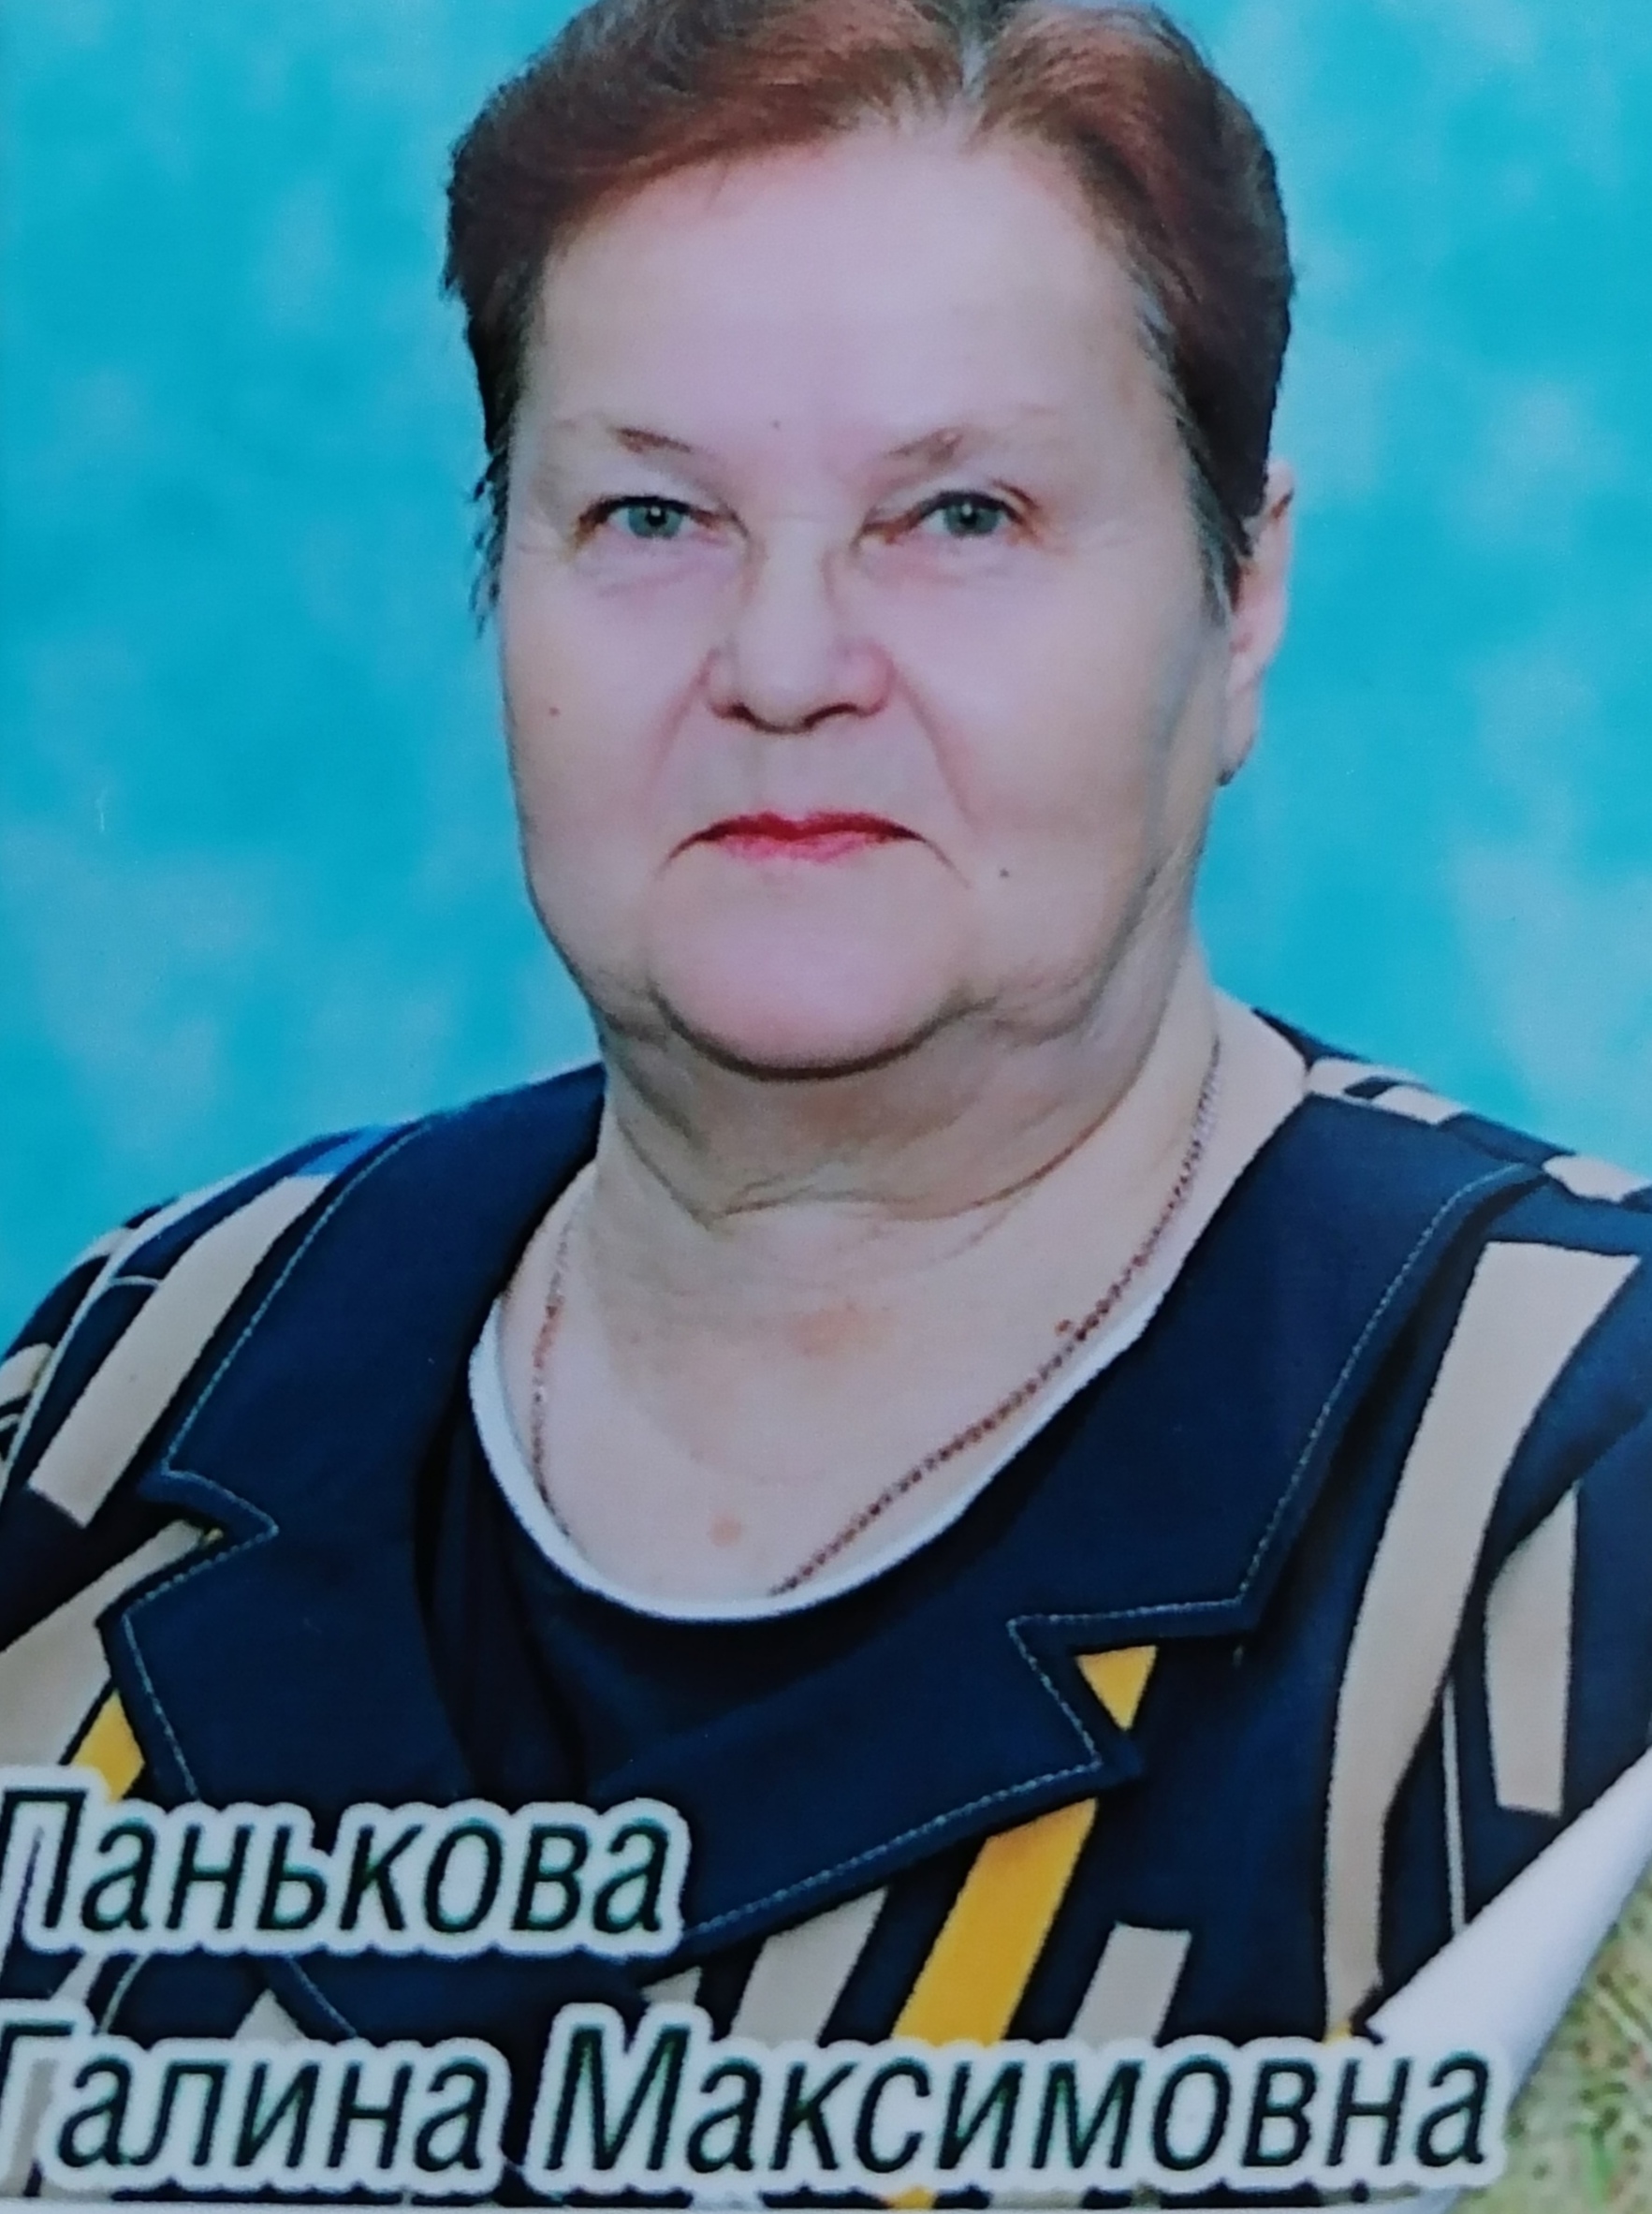 Панькова Галина Максимовна.